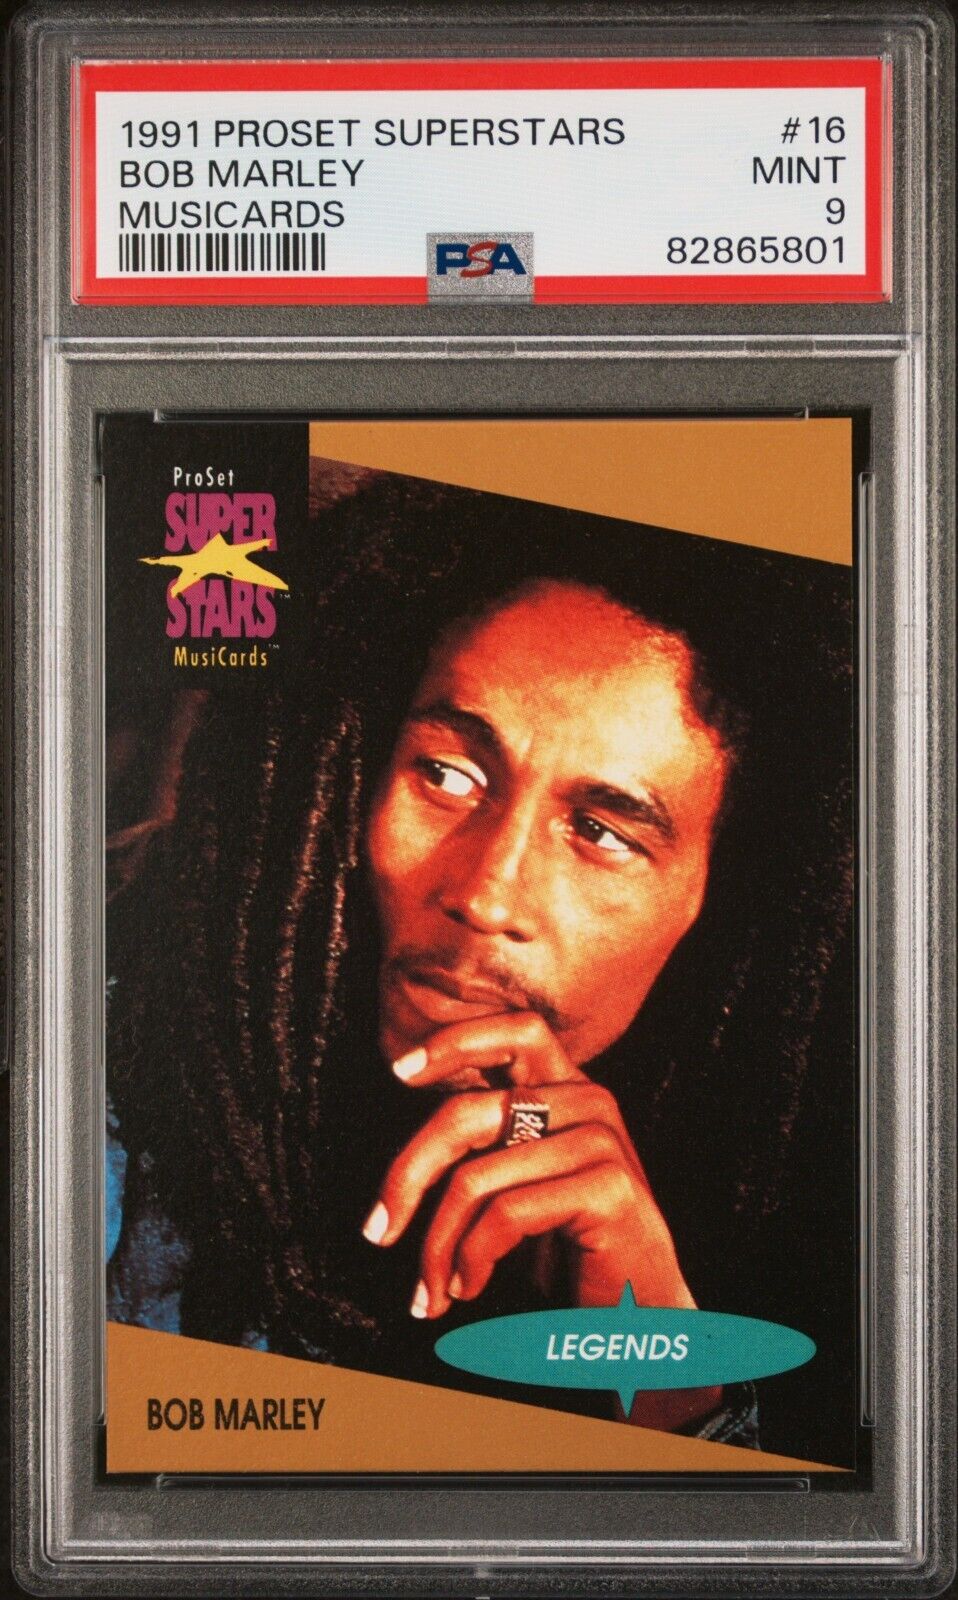 1991 Proset Superstars Bob Marley Musicards PSA 9 Graded MINT #16 Legends RARE